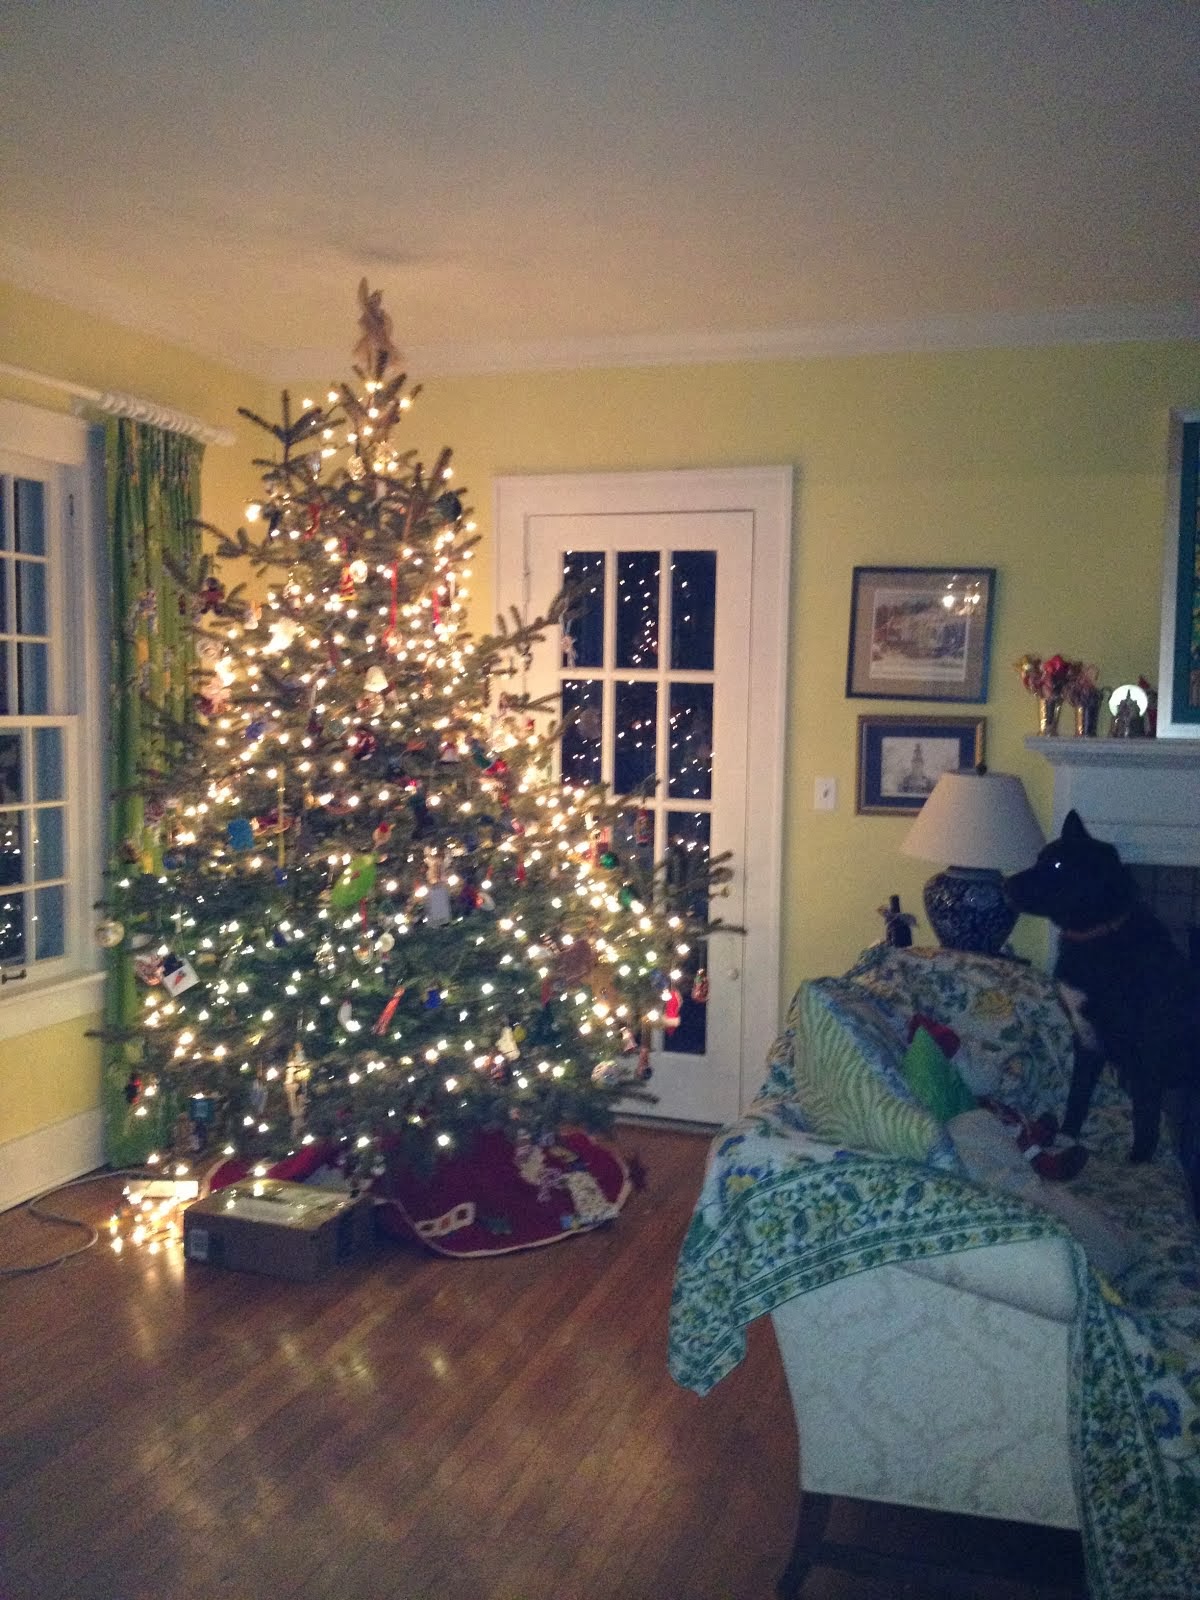 2013 Christmas Tree